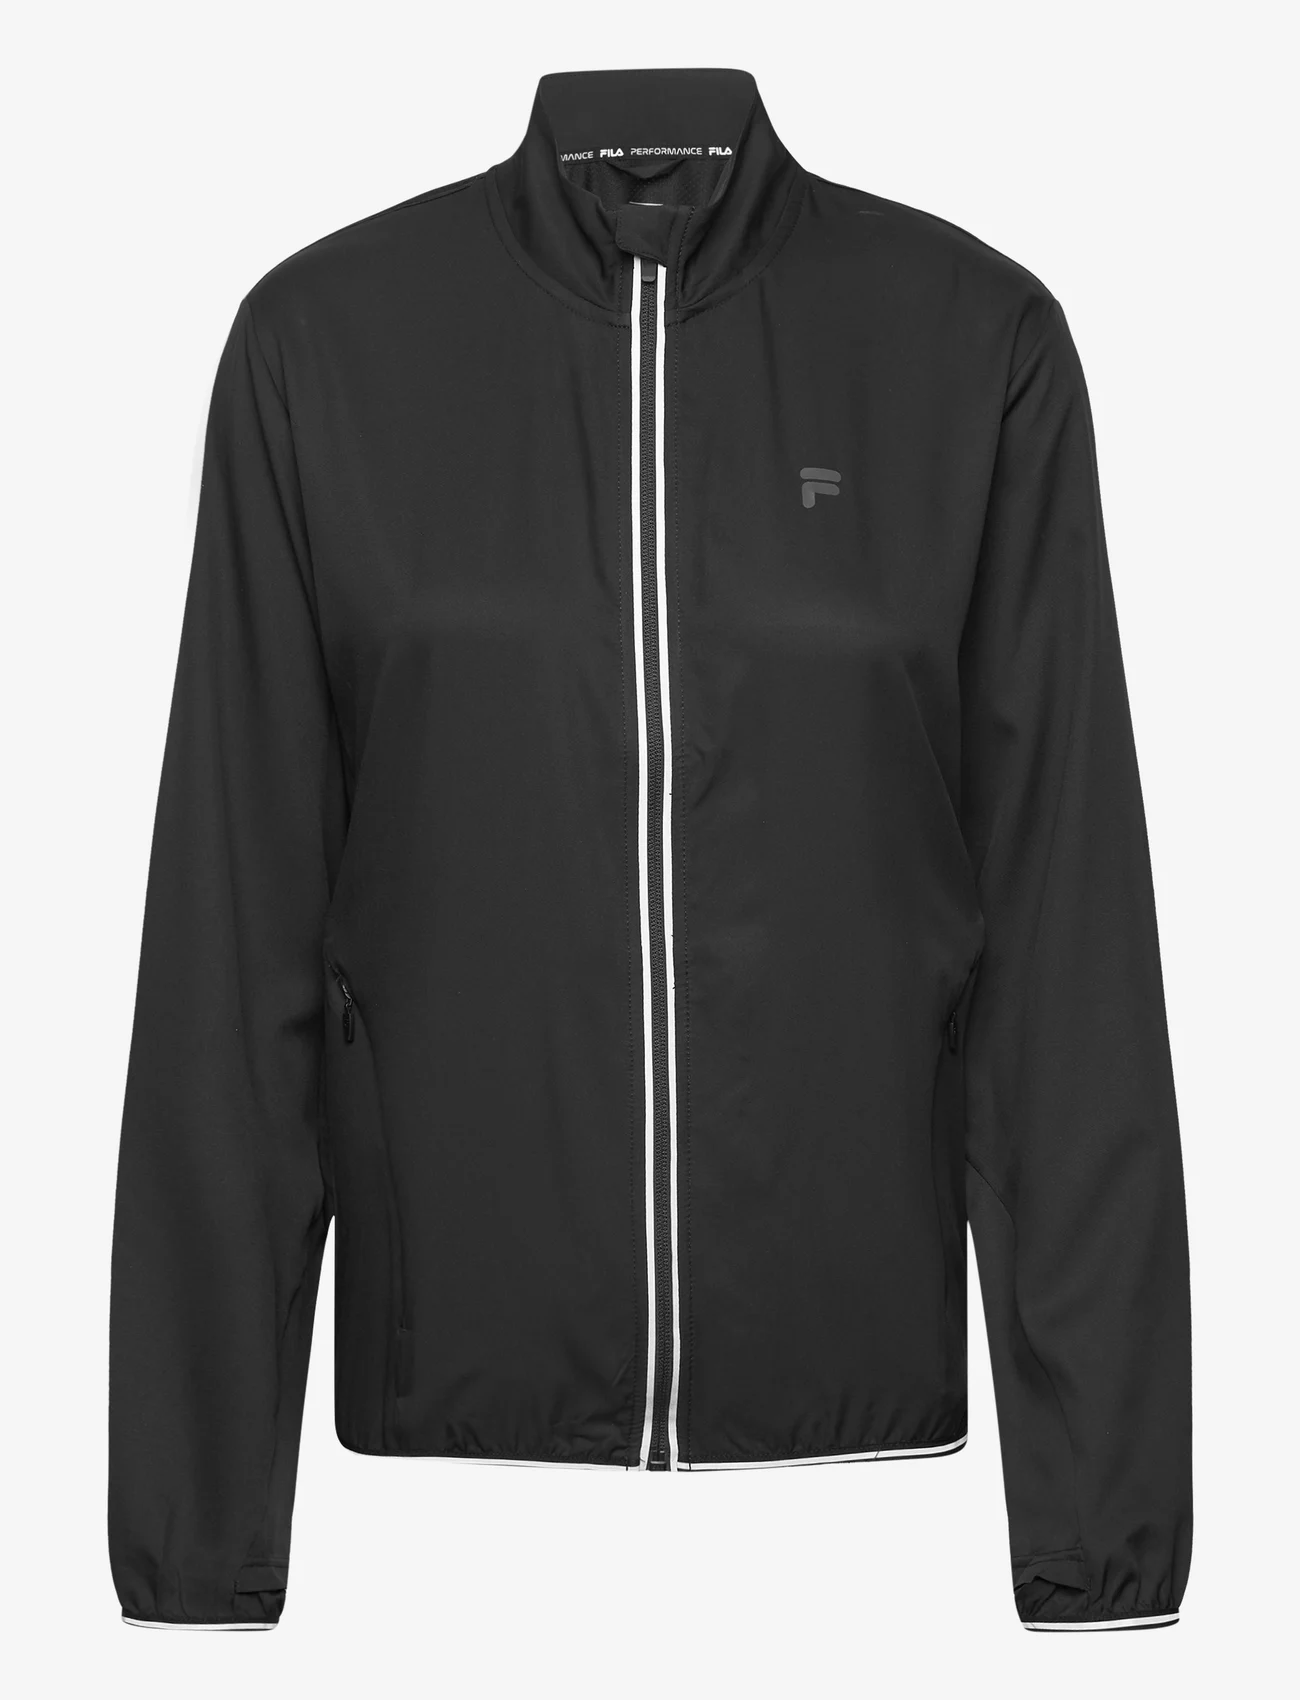 FILA - RONCHAMP running jacket - athleisurejacken - black - 0